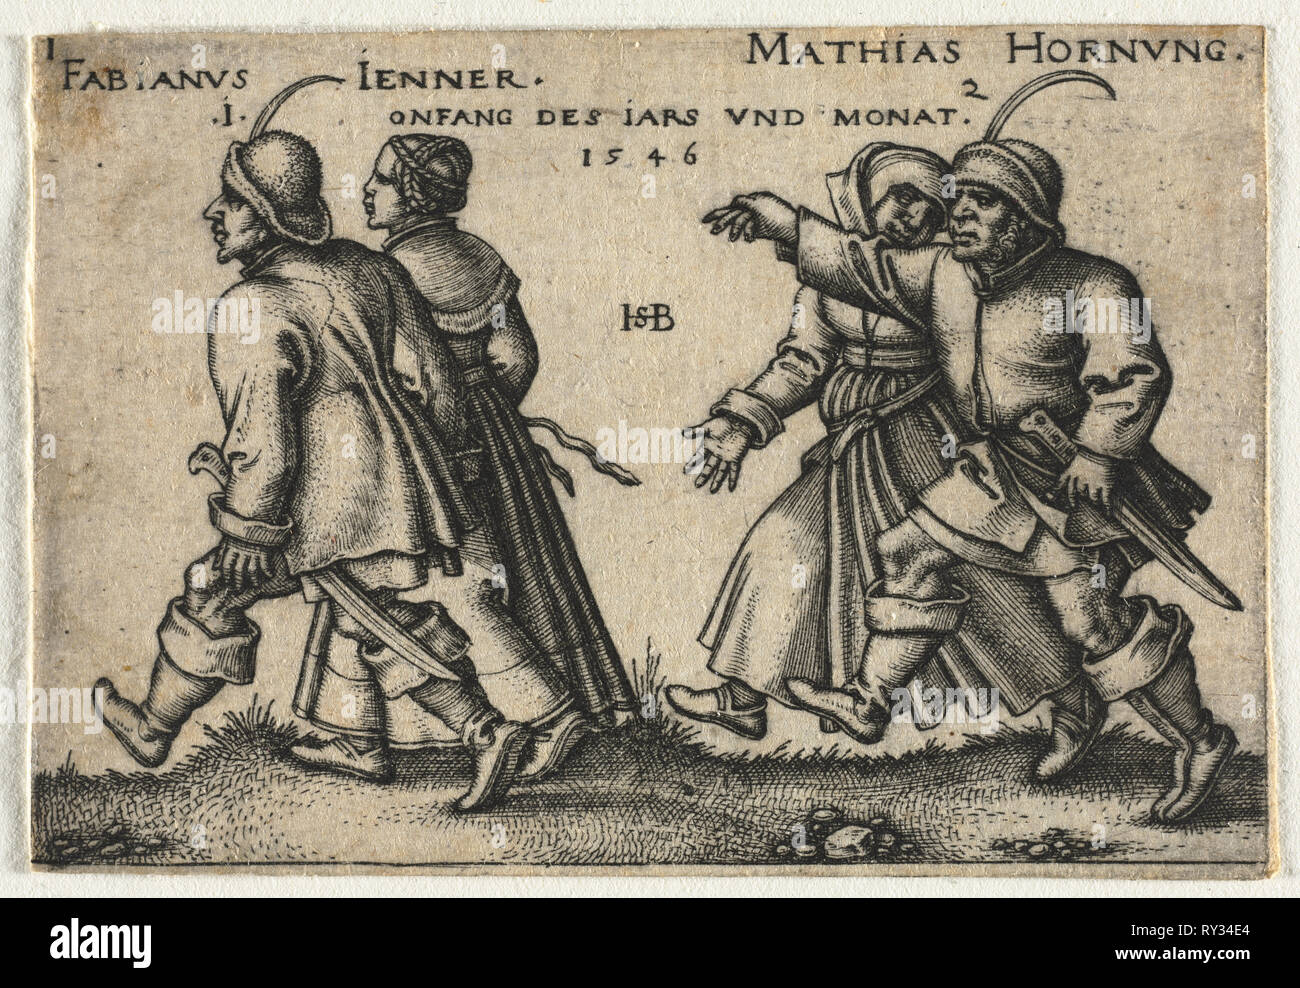 Il Matrimonio Contadino o dodici mesi: 1-Fabianus Jenner 2-Mathias Hornung, 1546. Hans Sebald Beham (Tedesco, 1500-1550). Incisione Foto Stock